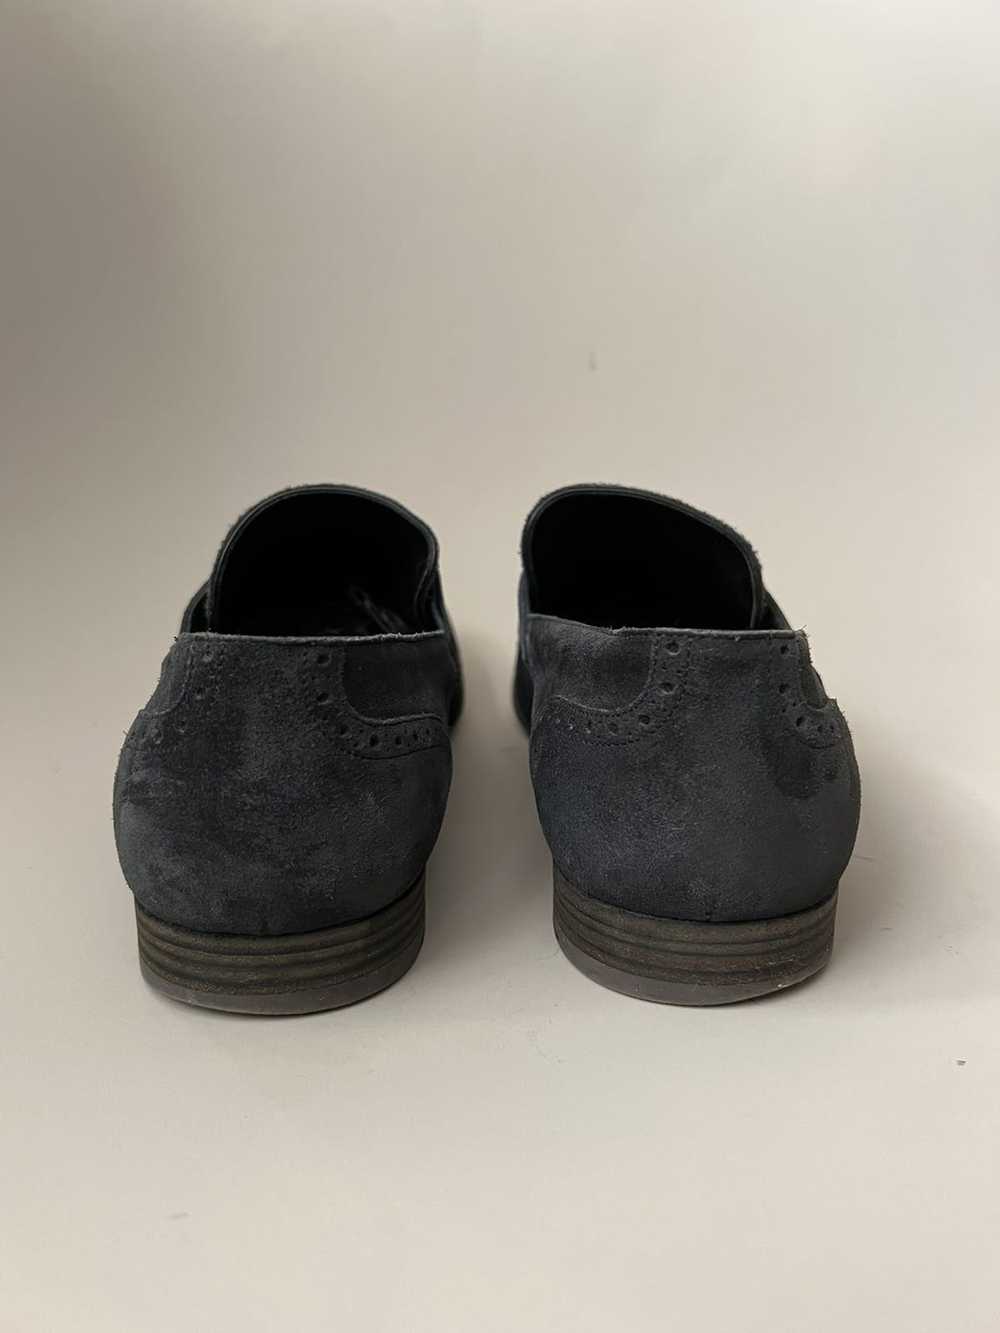 Yves Saint Laurent YSL suede shoes - image 7